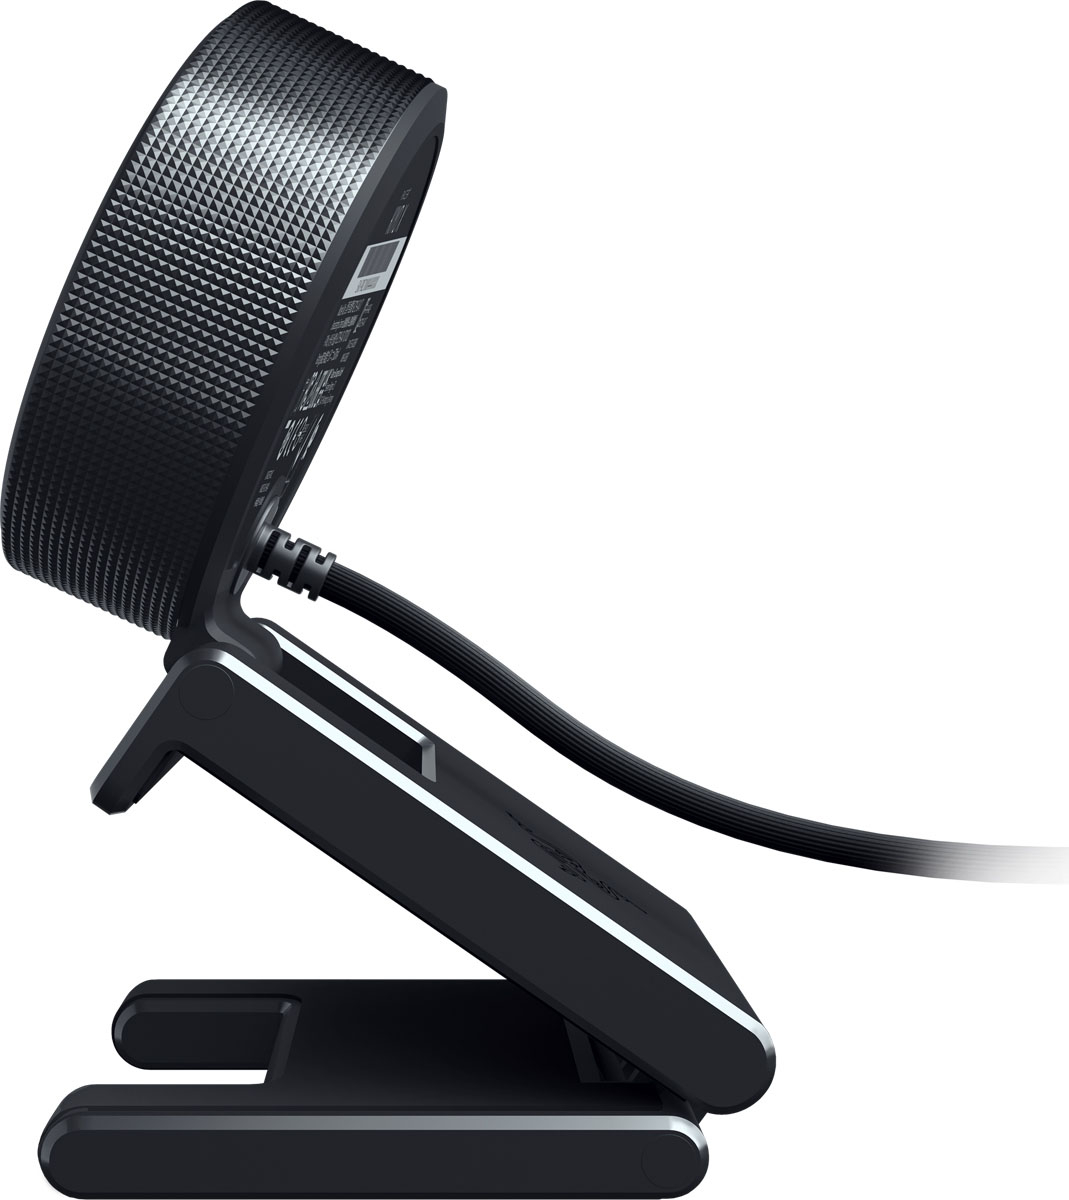 Razer Kiyo Gaming Webcam for PC